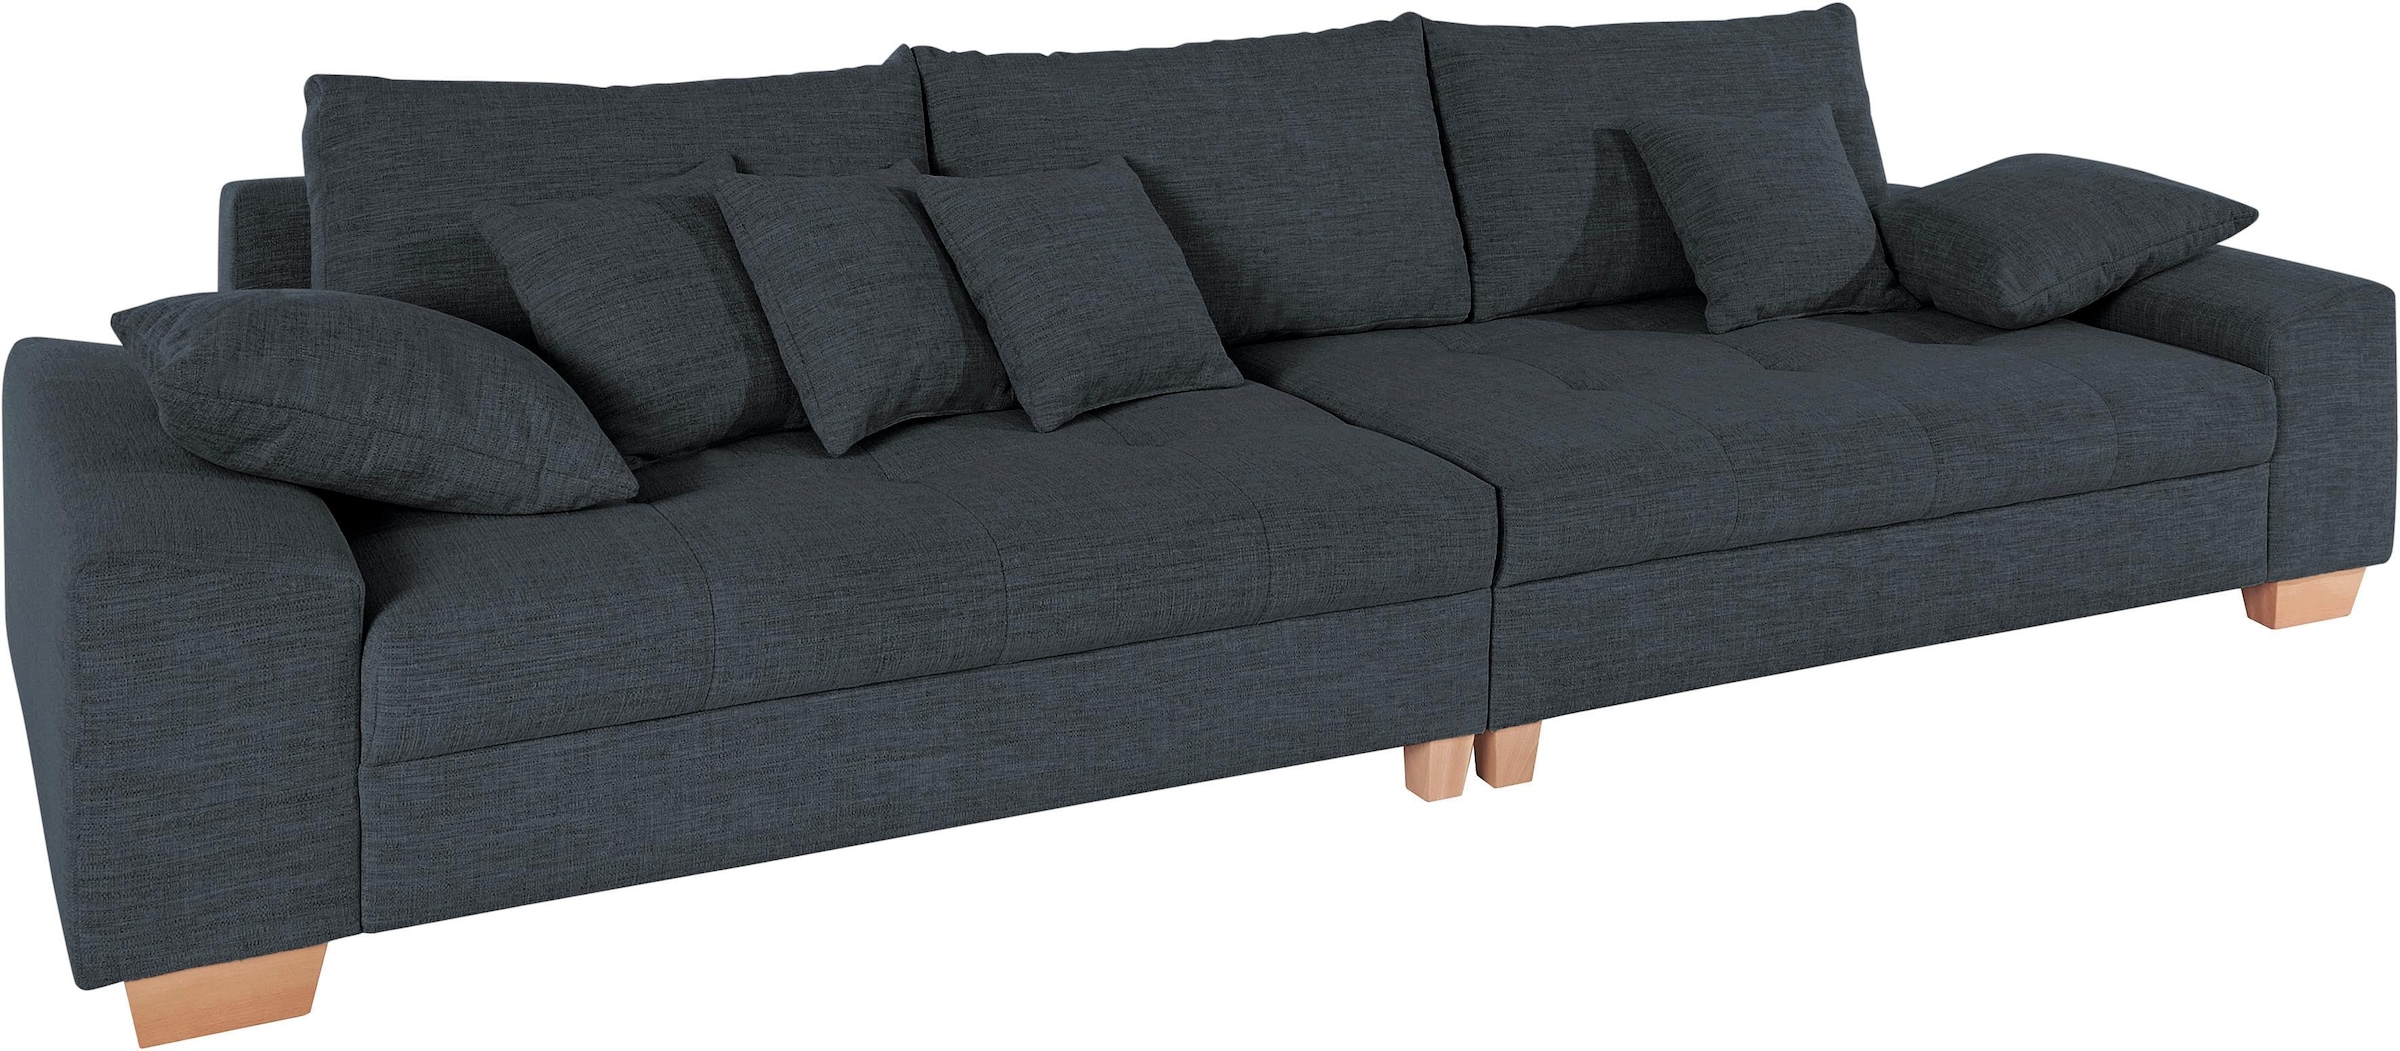 Big-Sofa »Nikita«, wahlweise mit Kaltschaum (140kg Belastung/Sitz) und AquaClean-Stoff